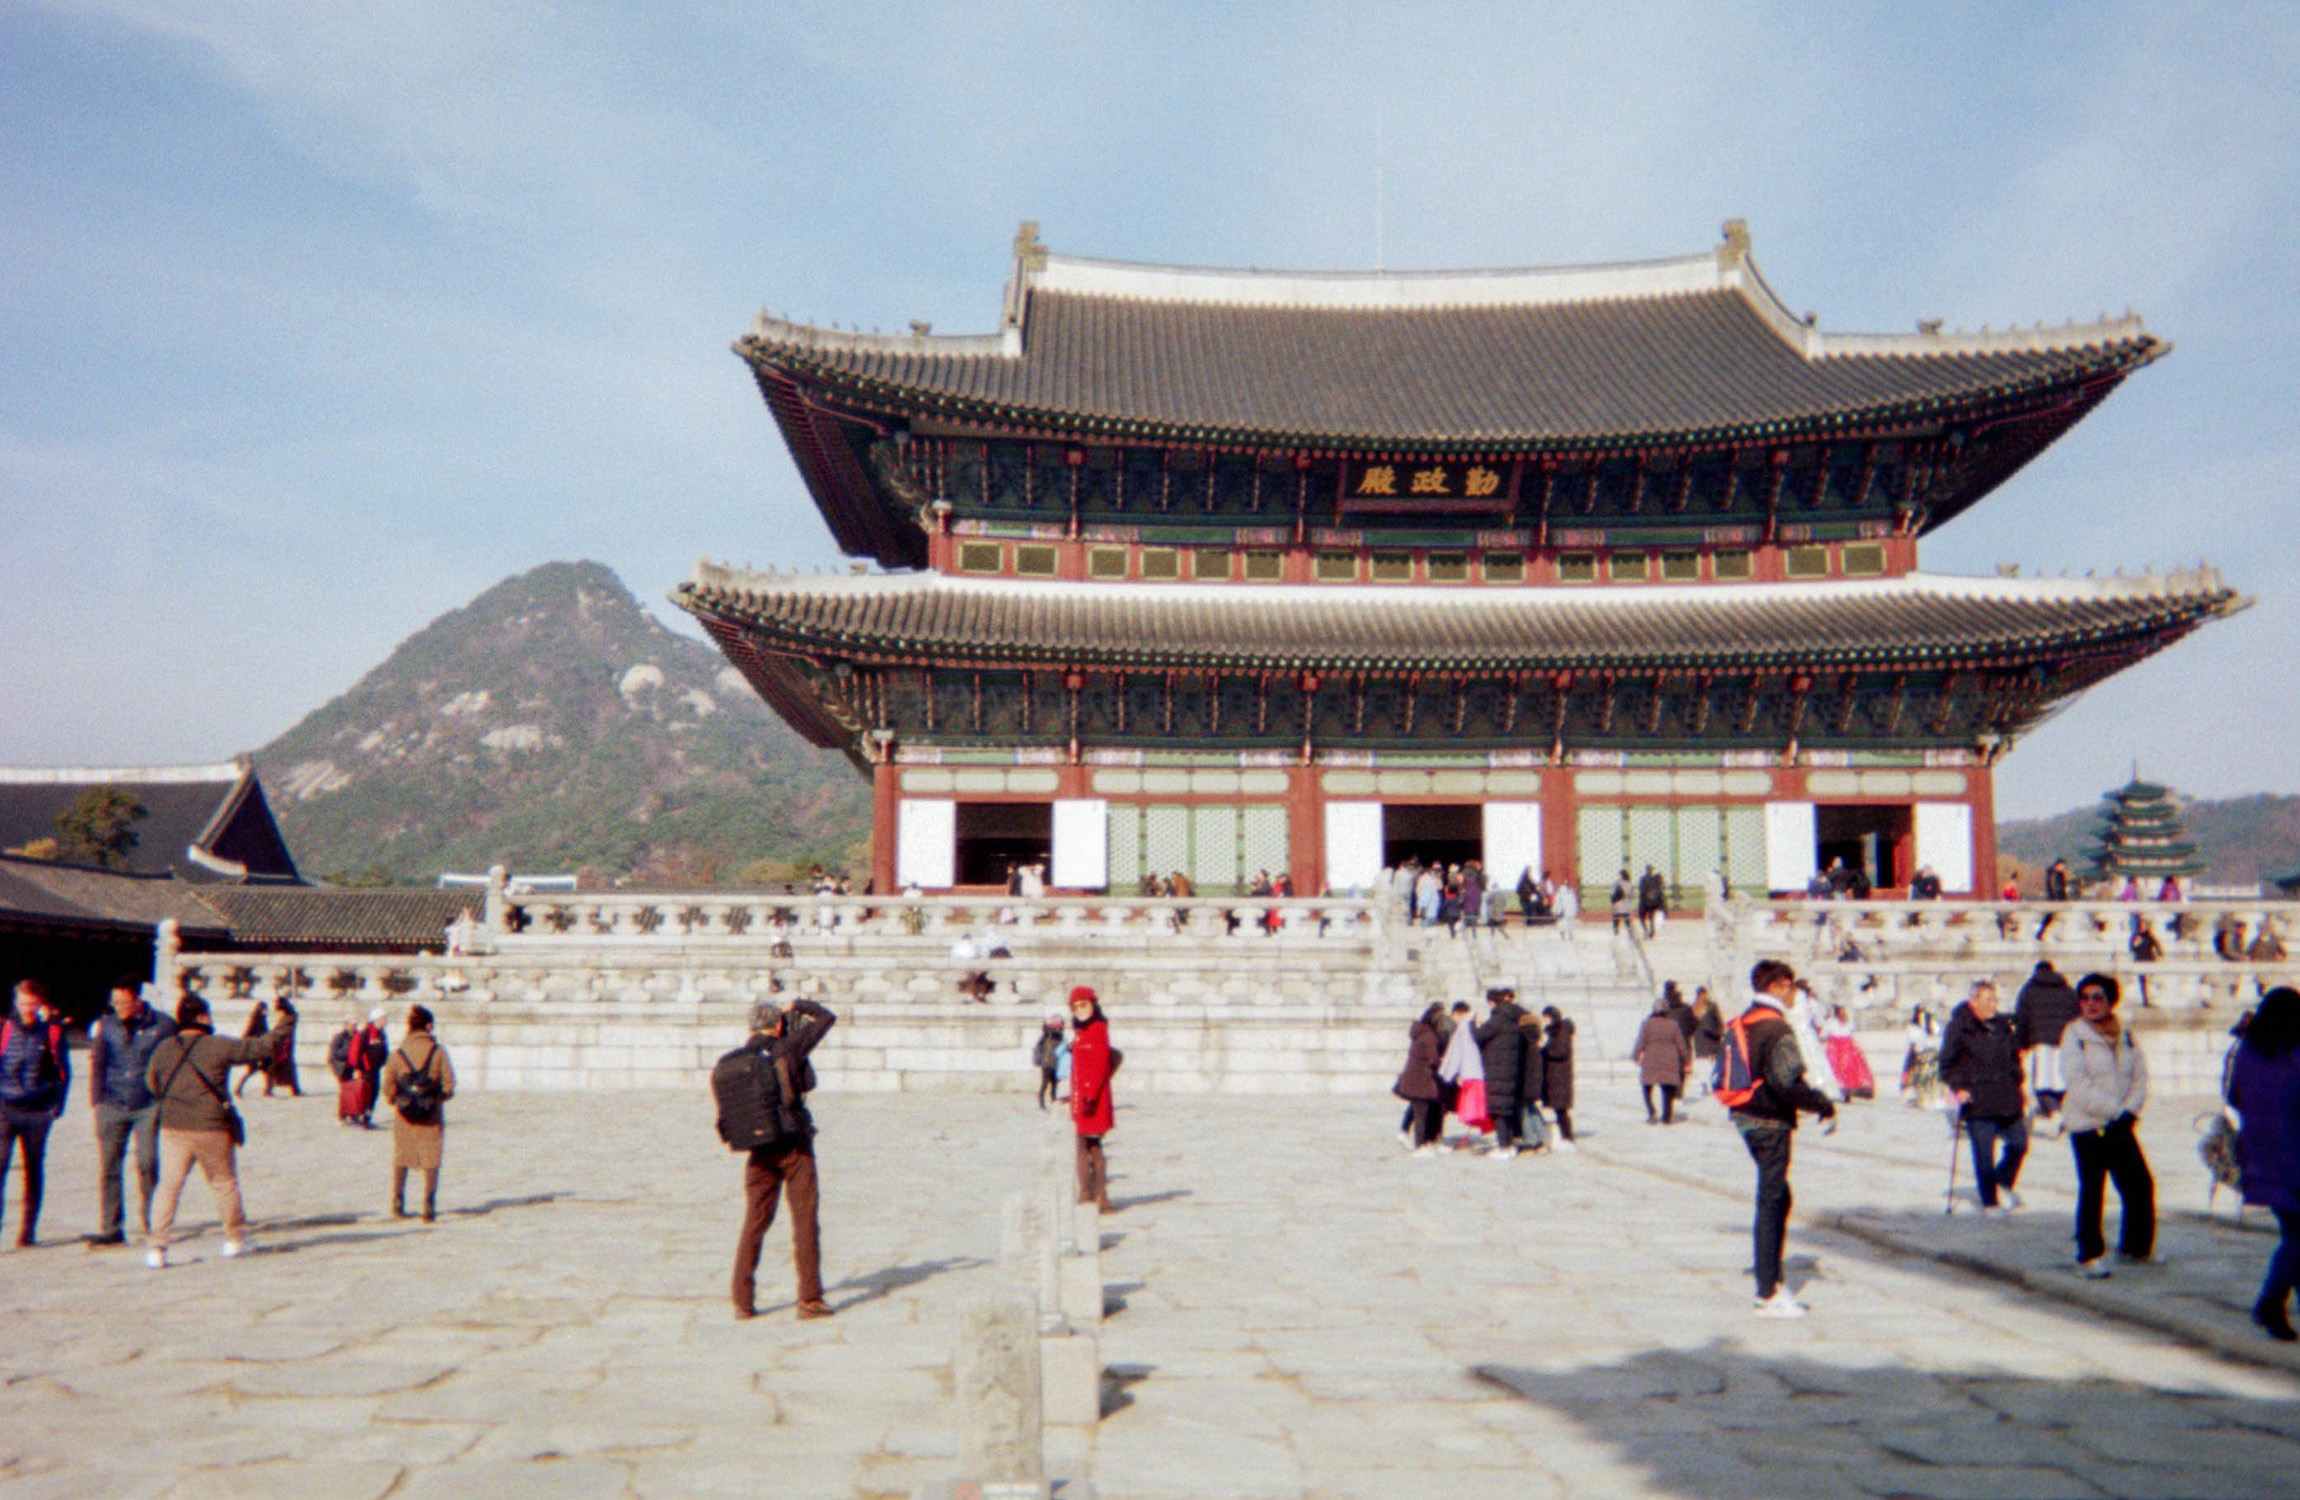 photo of a pagoda in South Korea